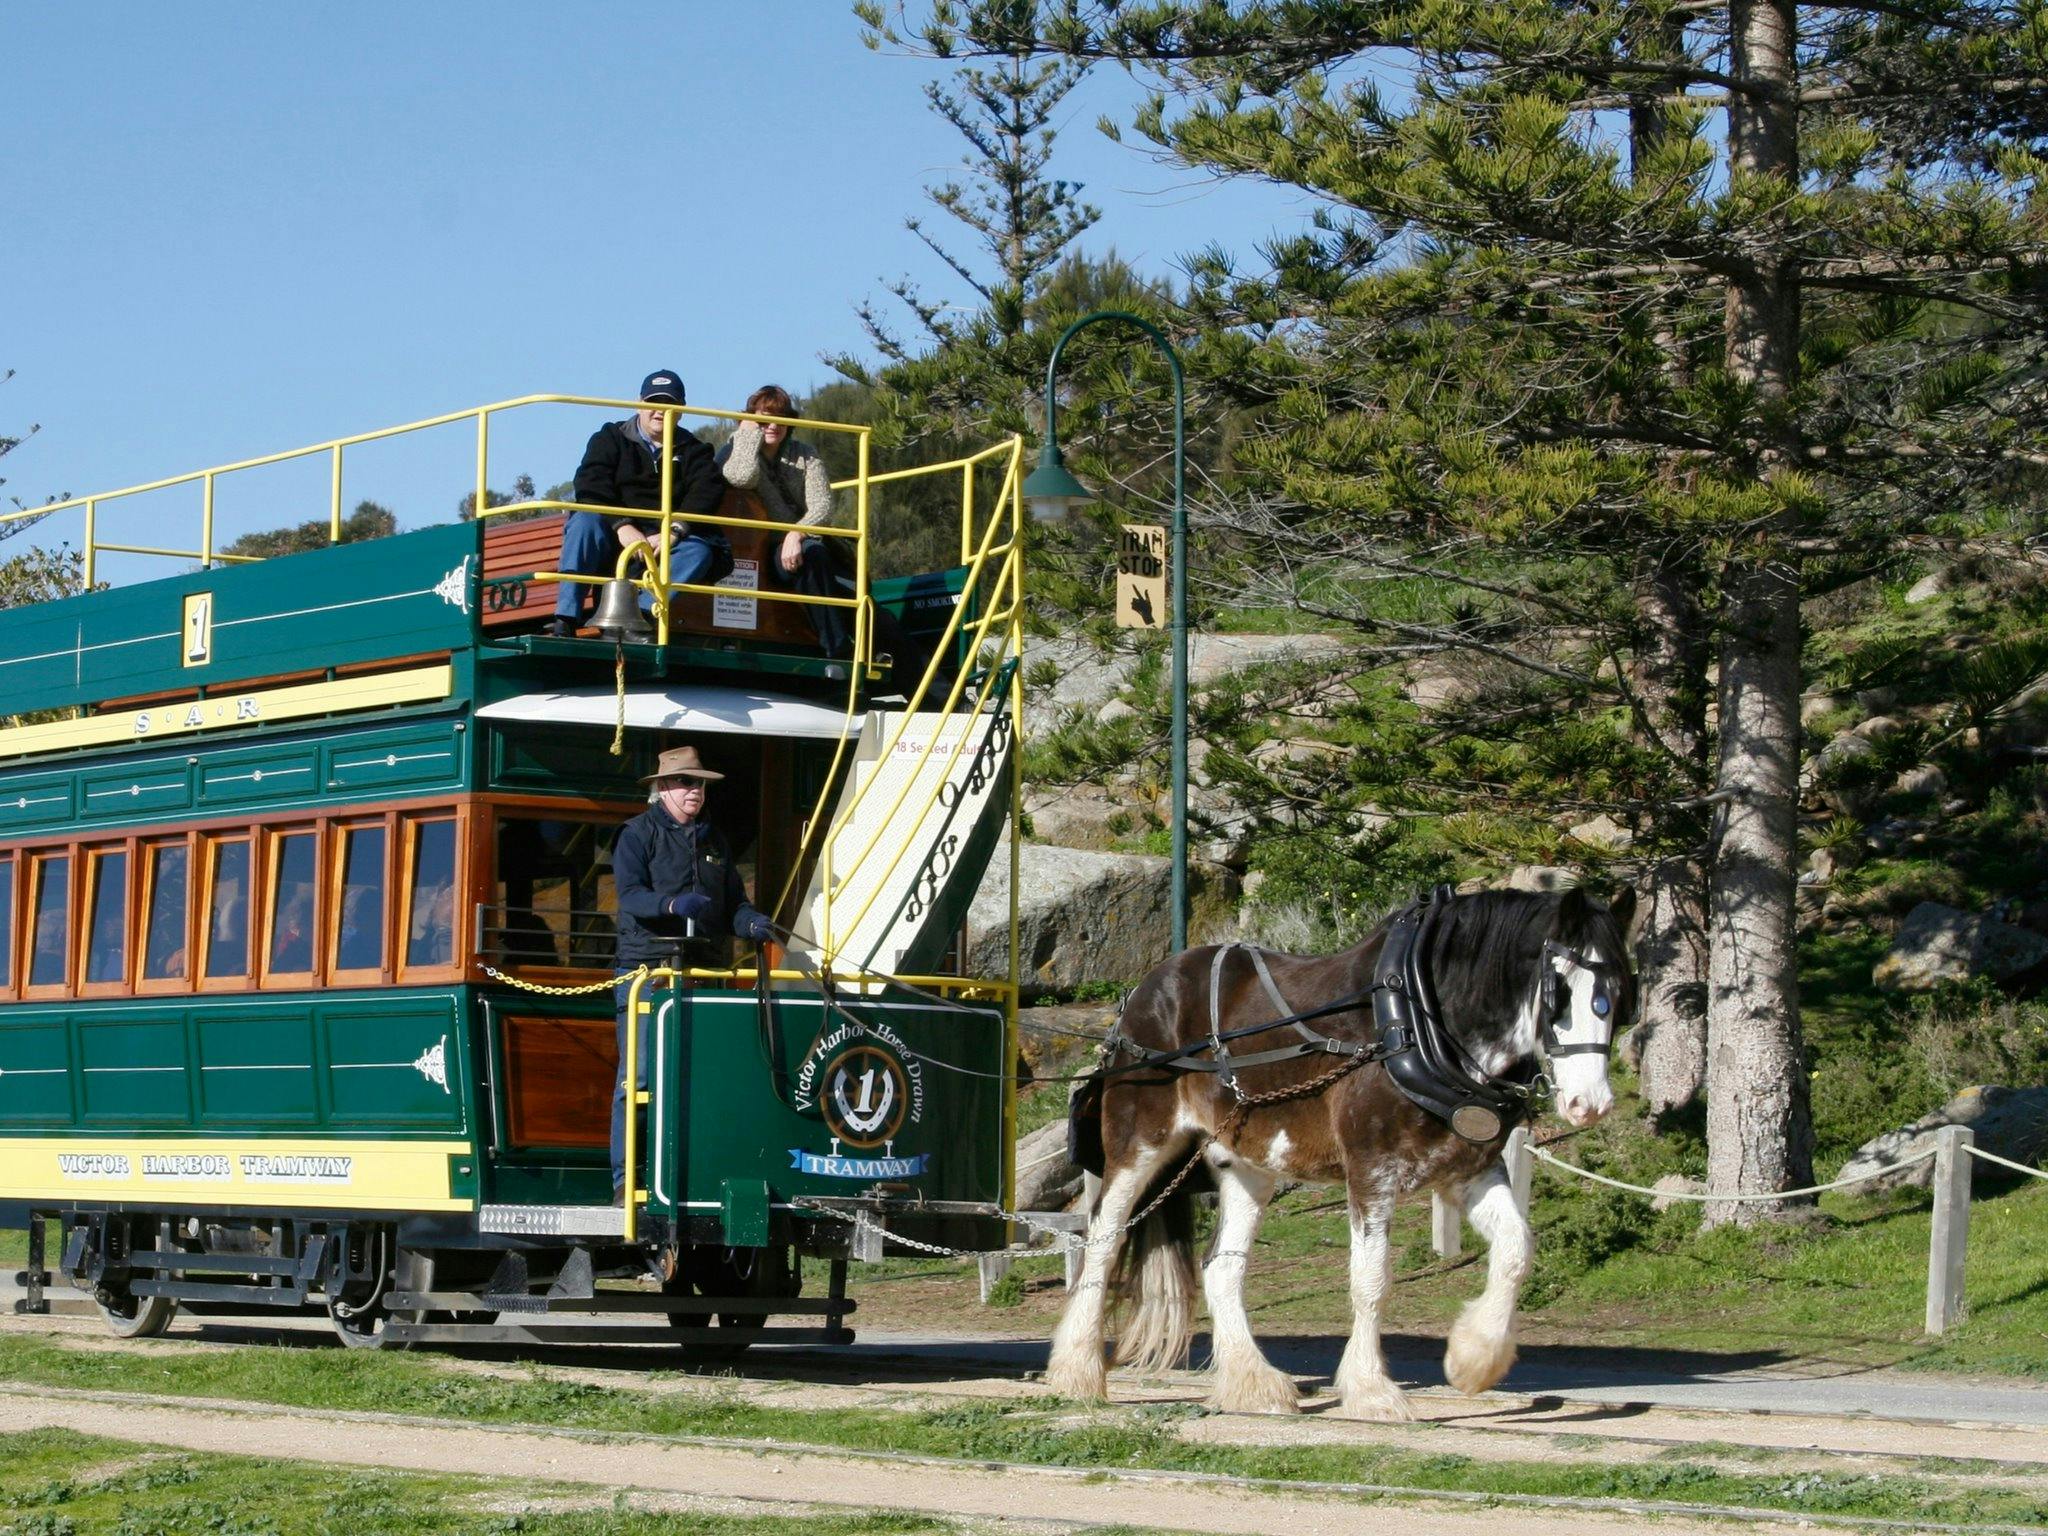 Victor Harbor Horse Tram Authority